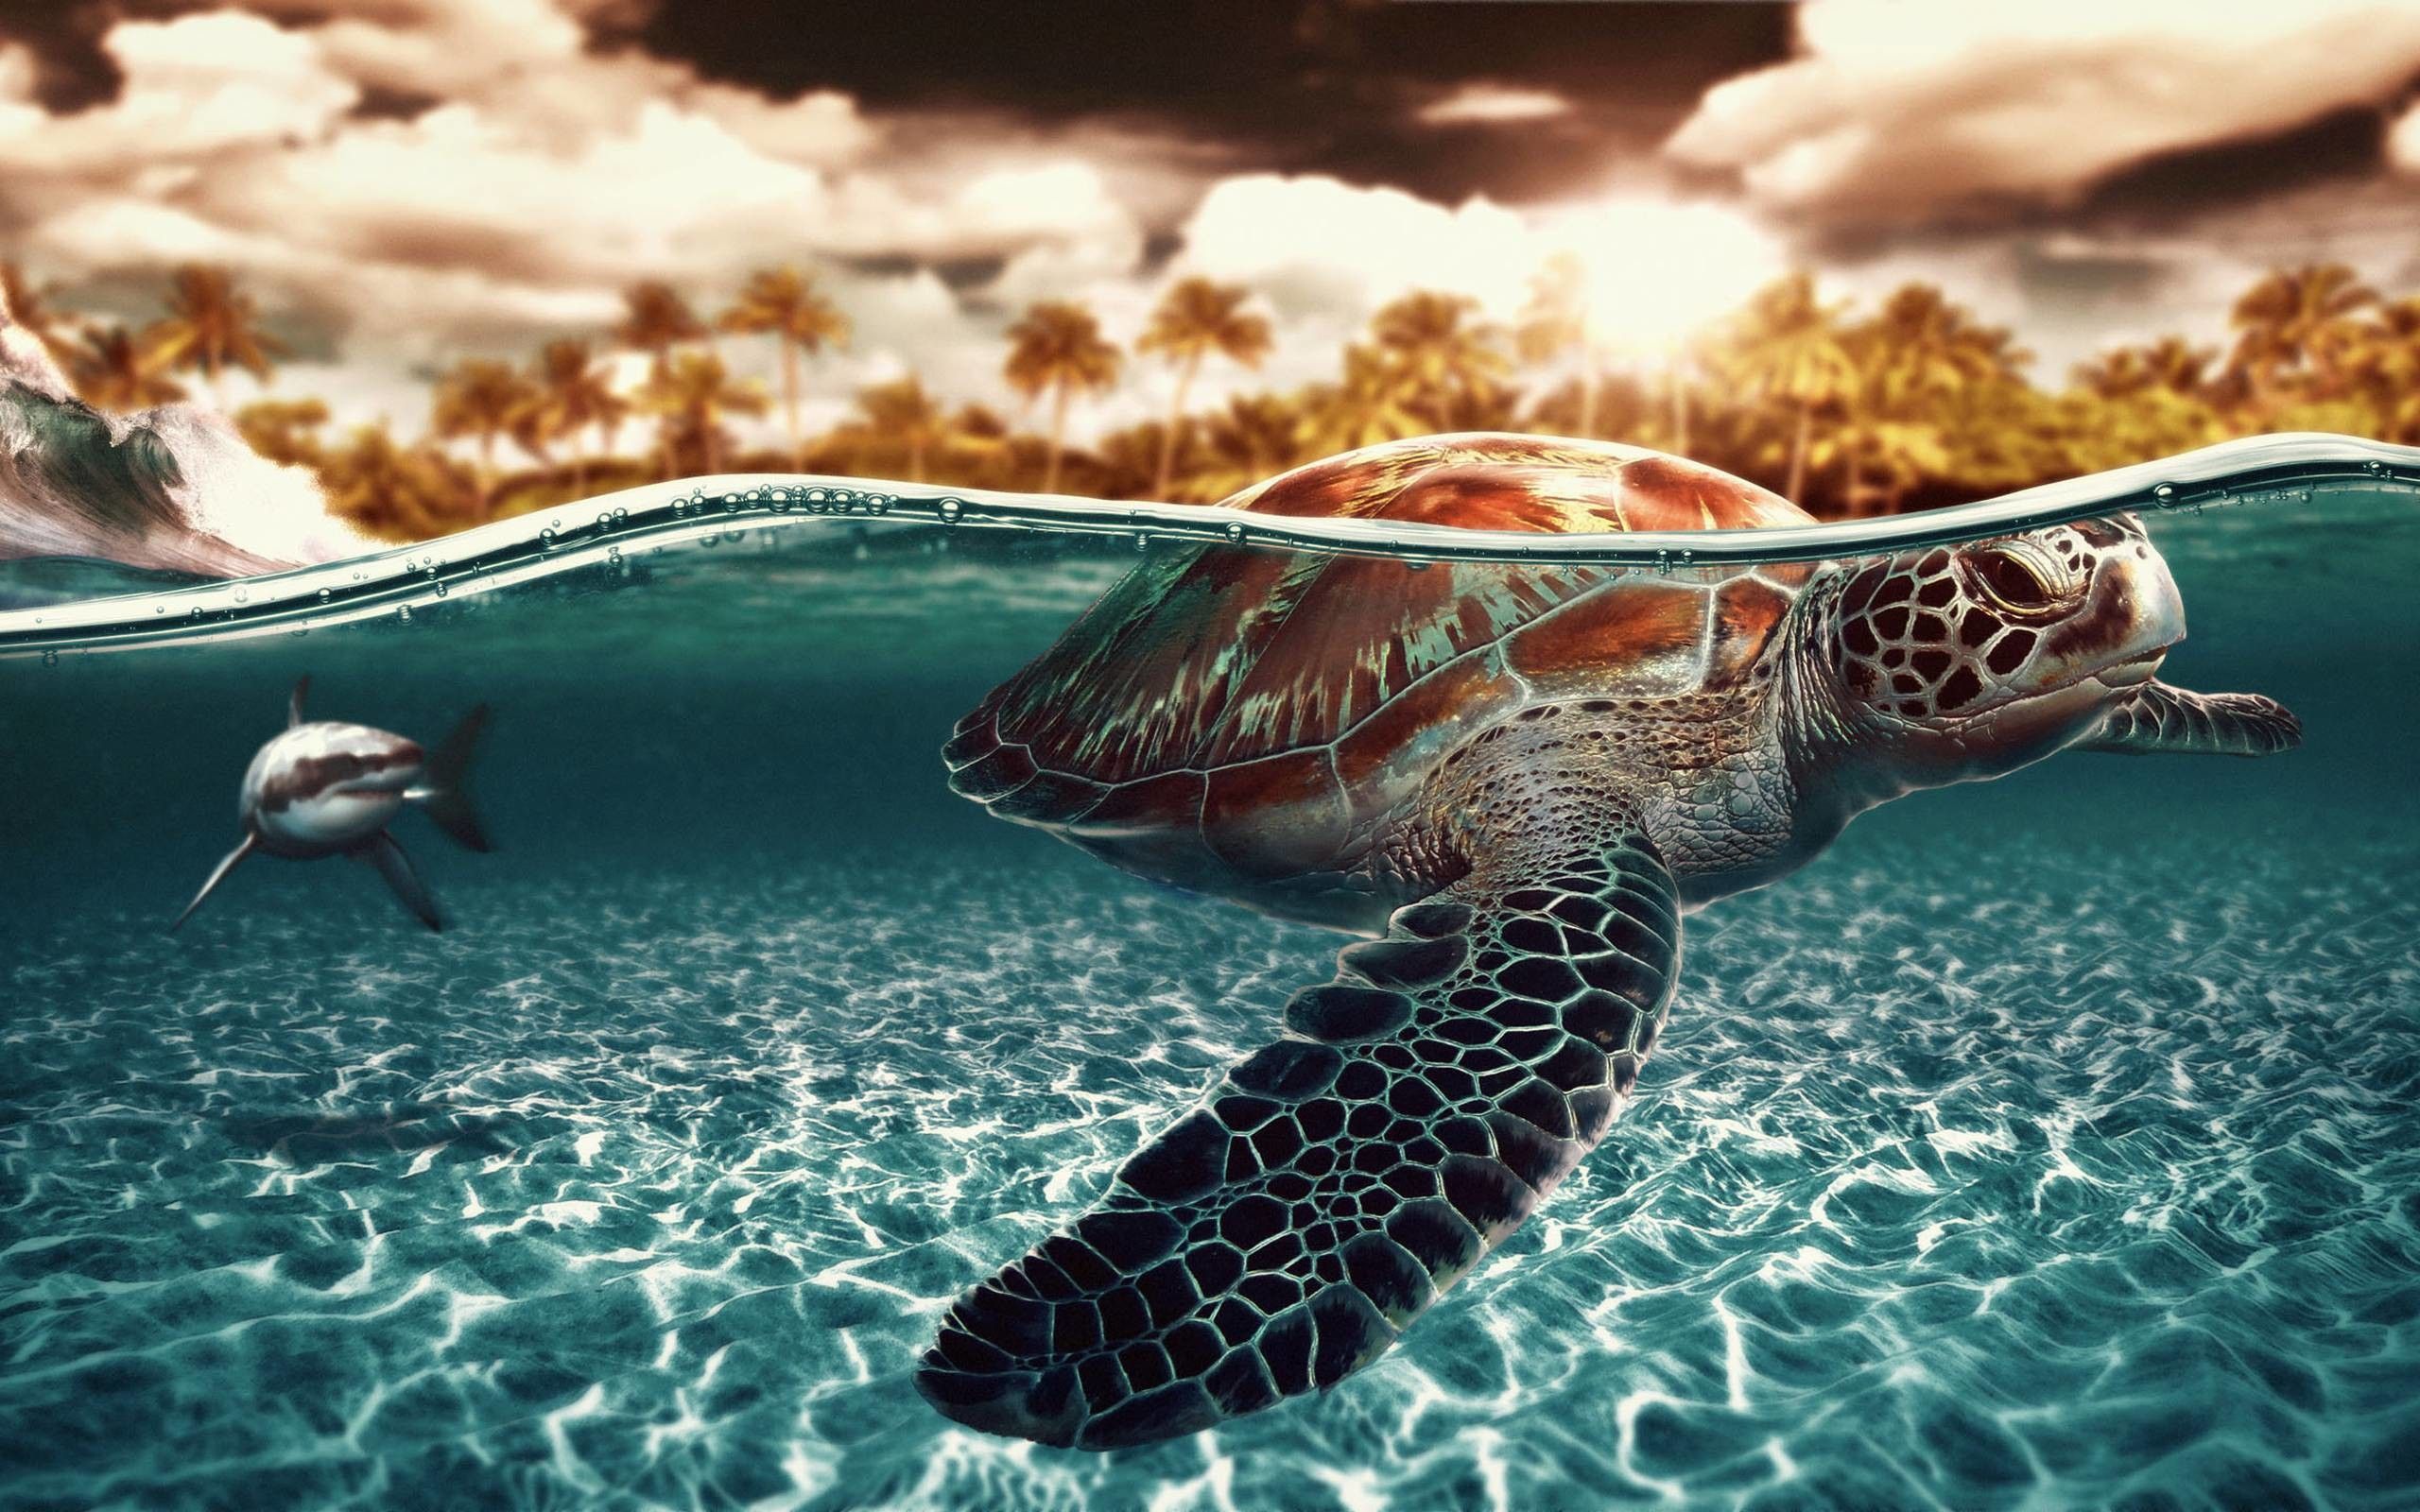 A turtle swimming in the ocean - Sea turtle, turtle